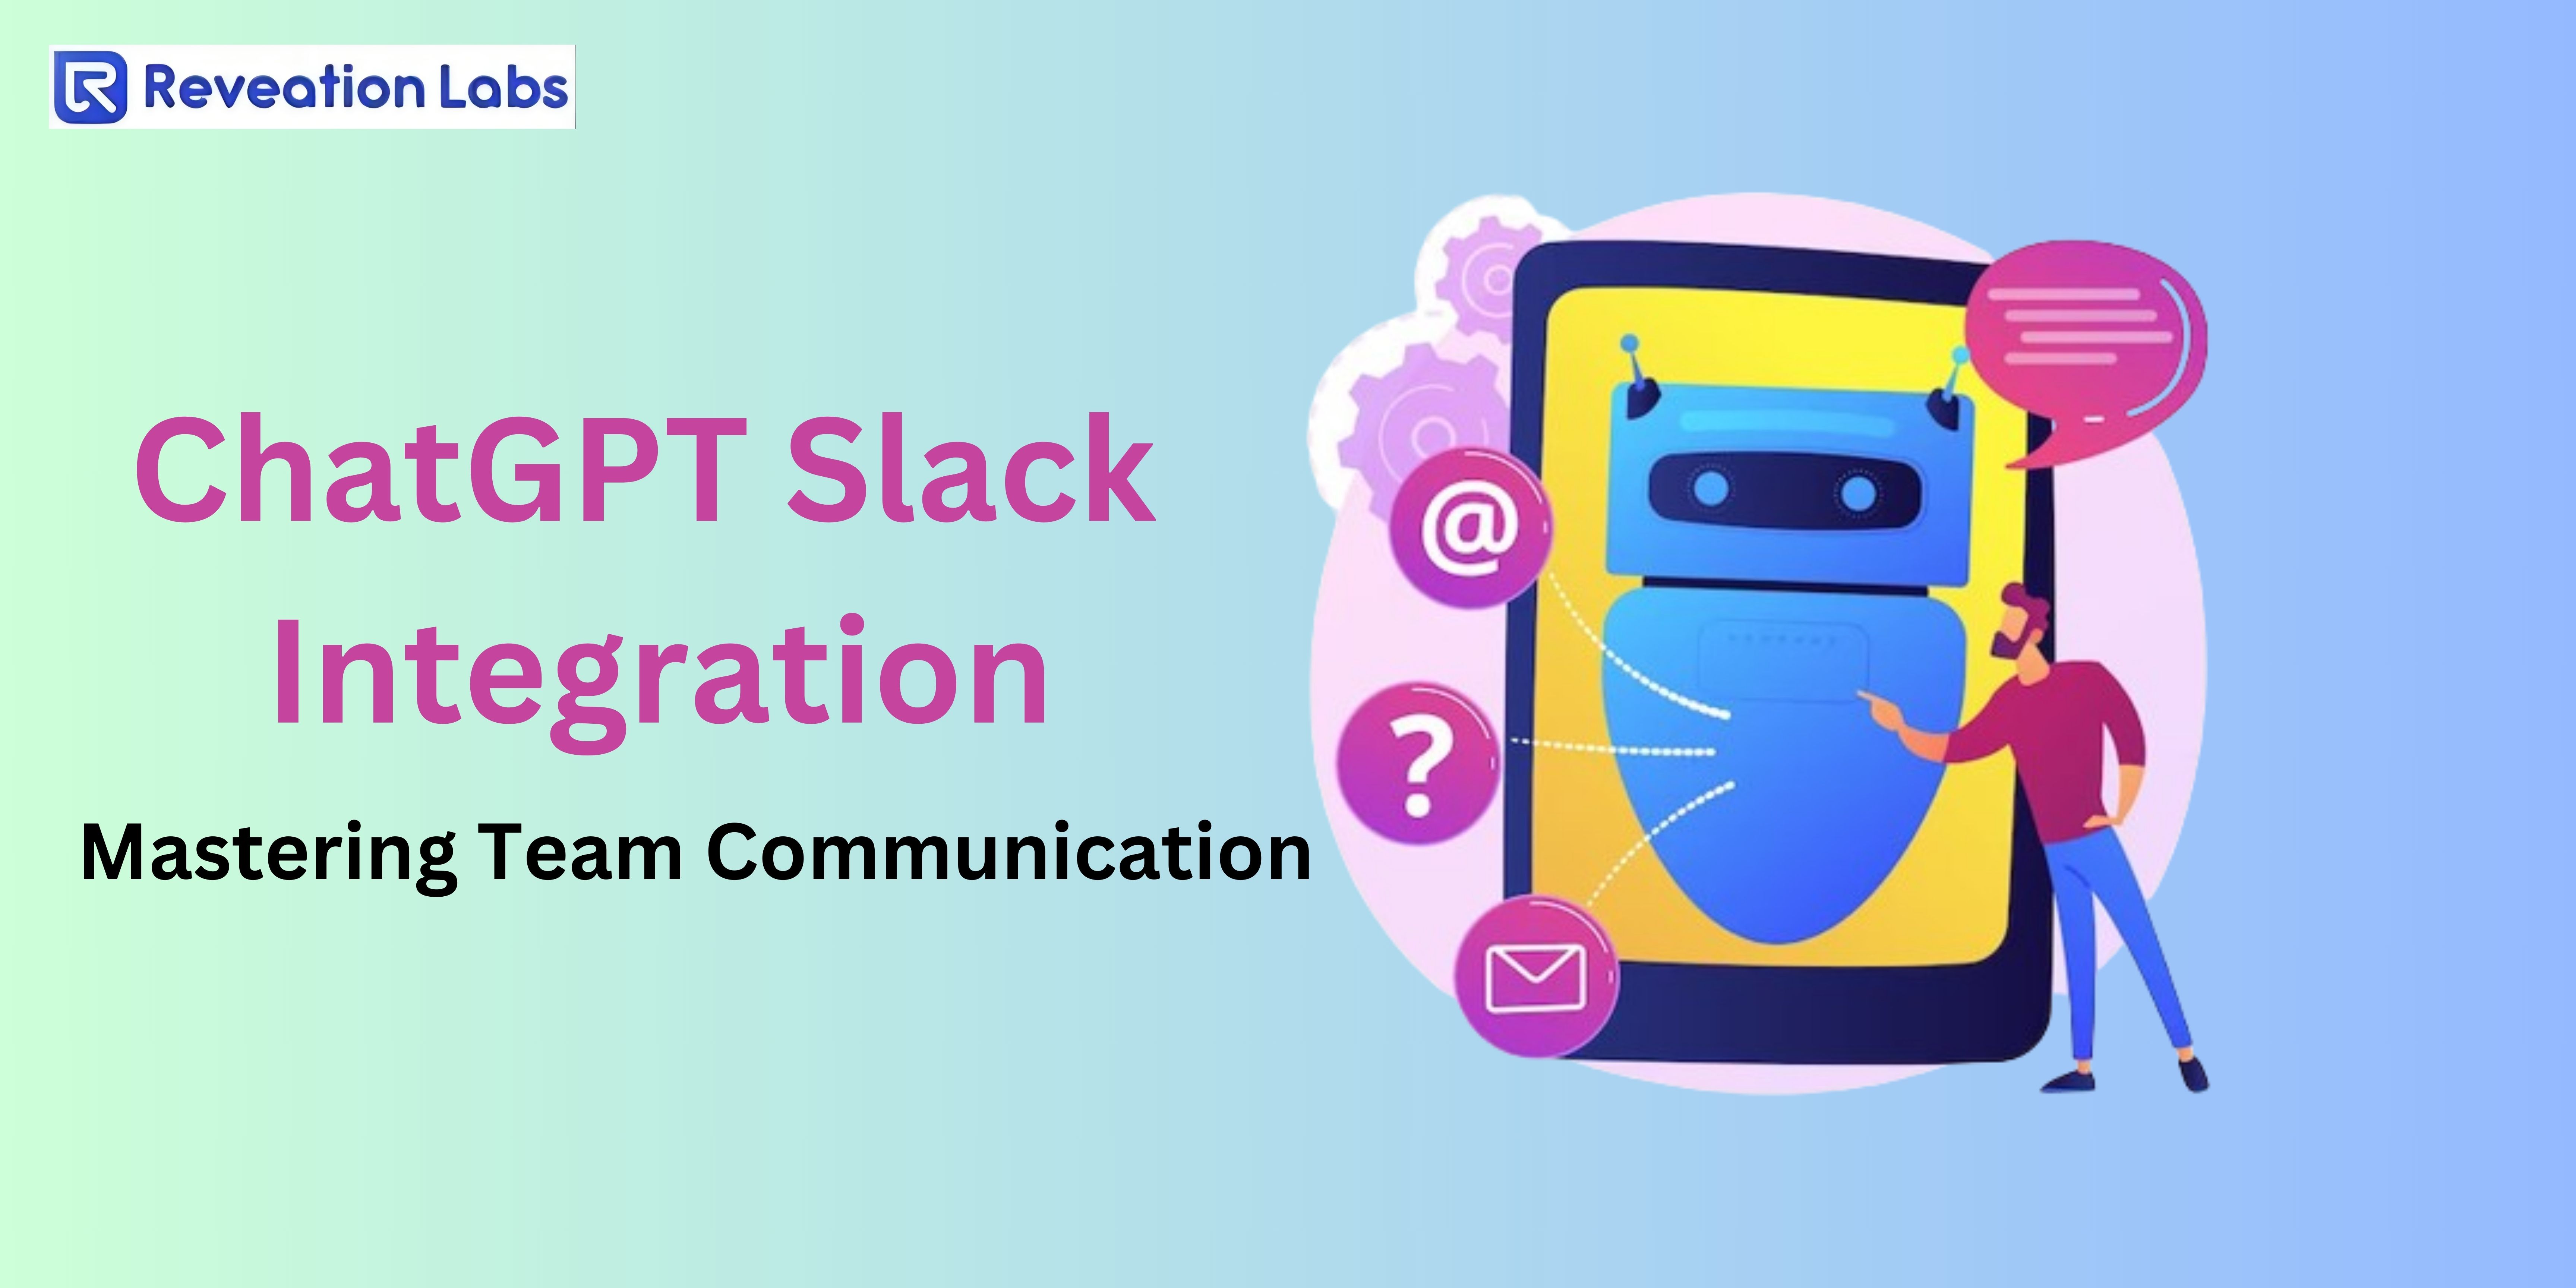 ChatGPT Slack Integration- Mastering Team Communication